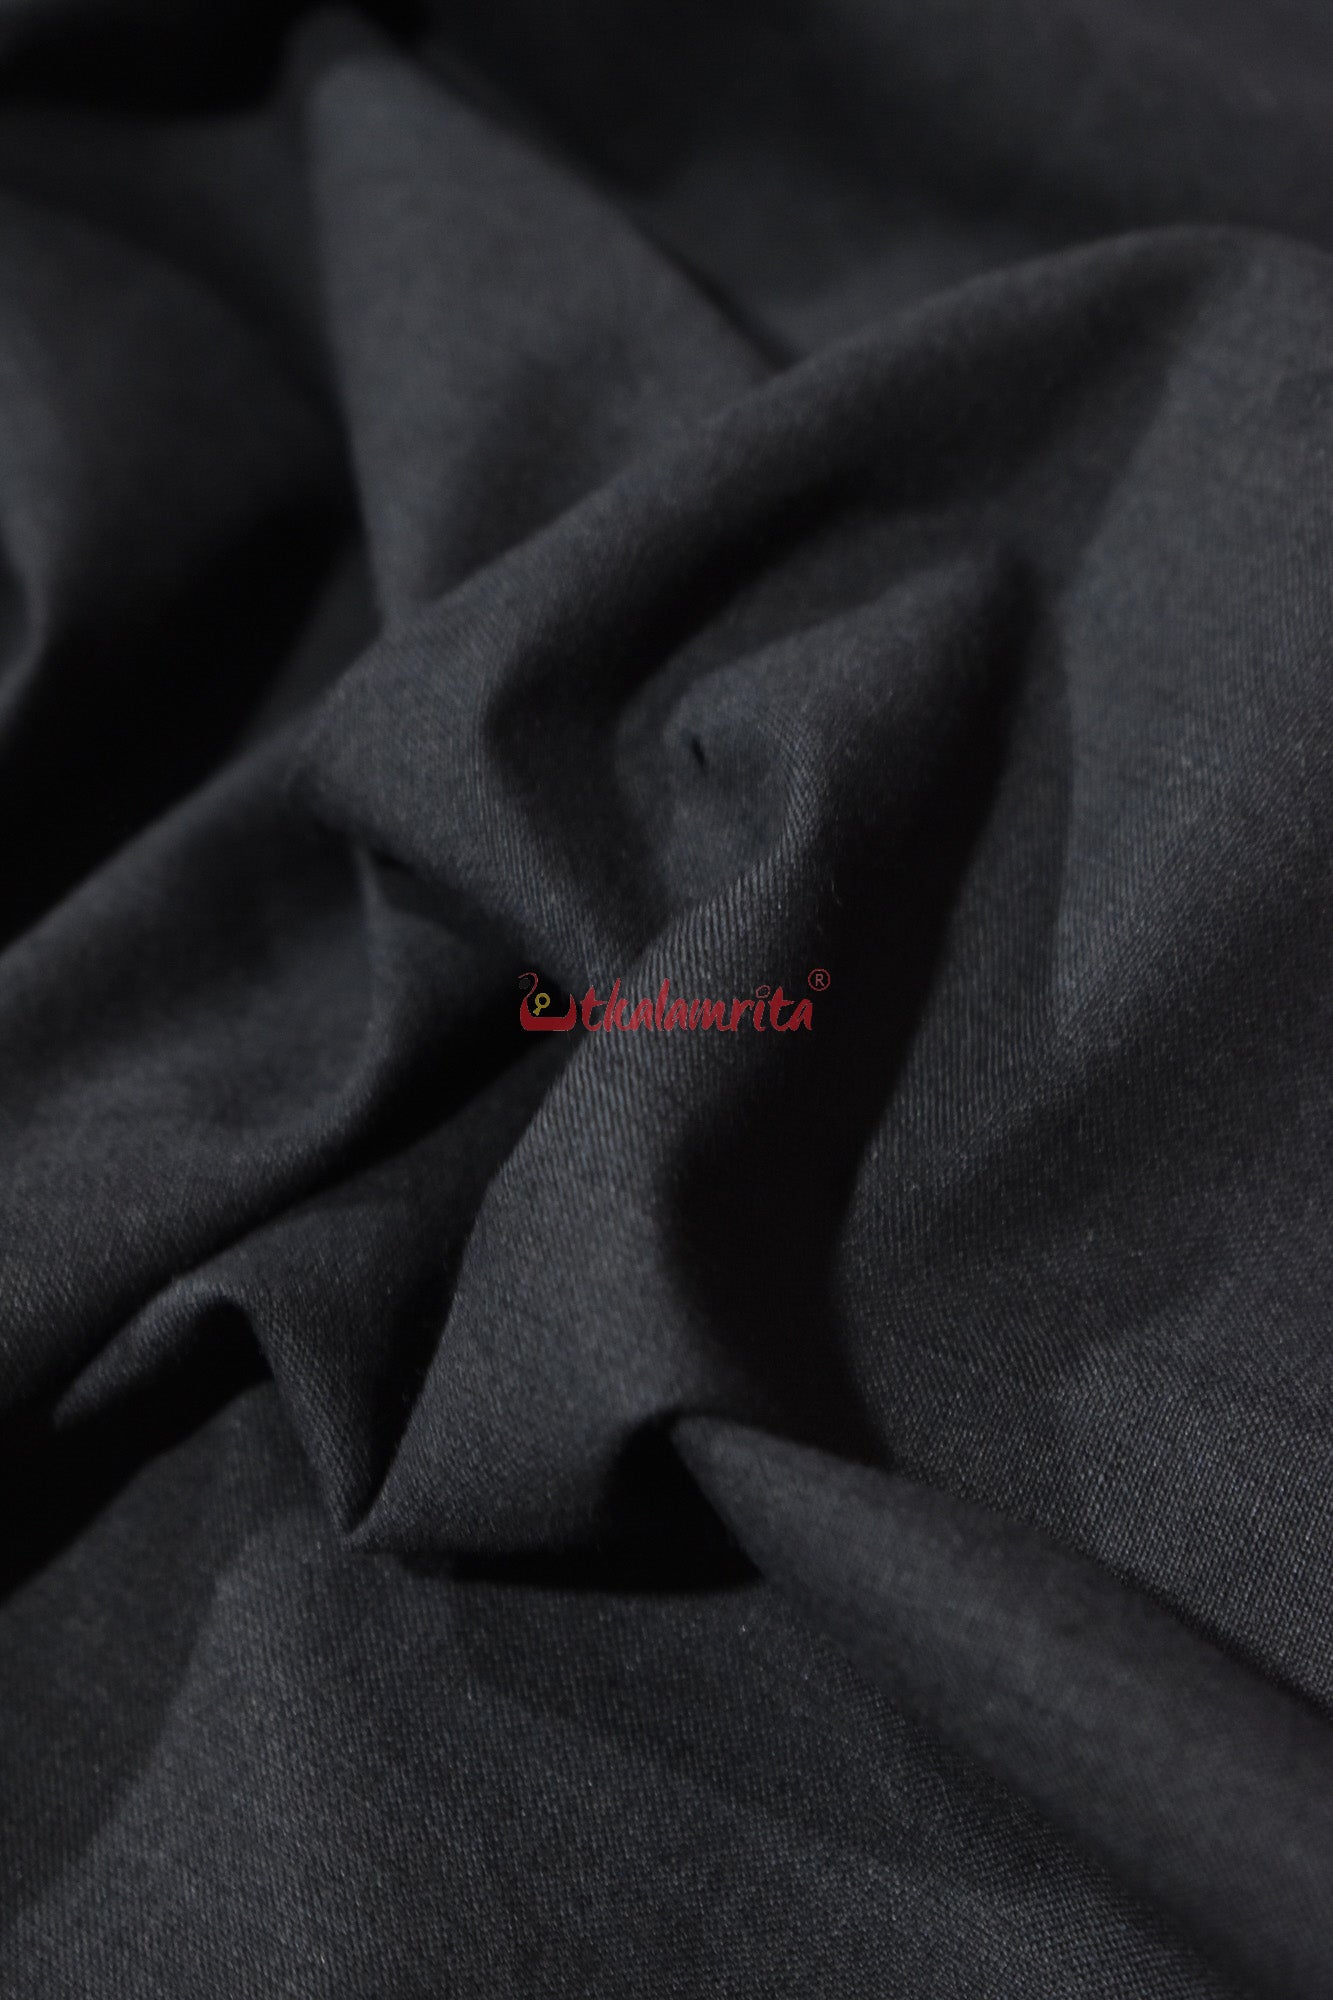 Black Blouse (Fabric)